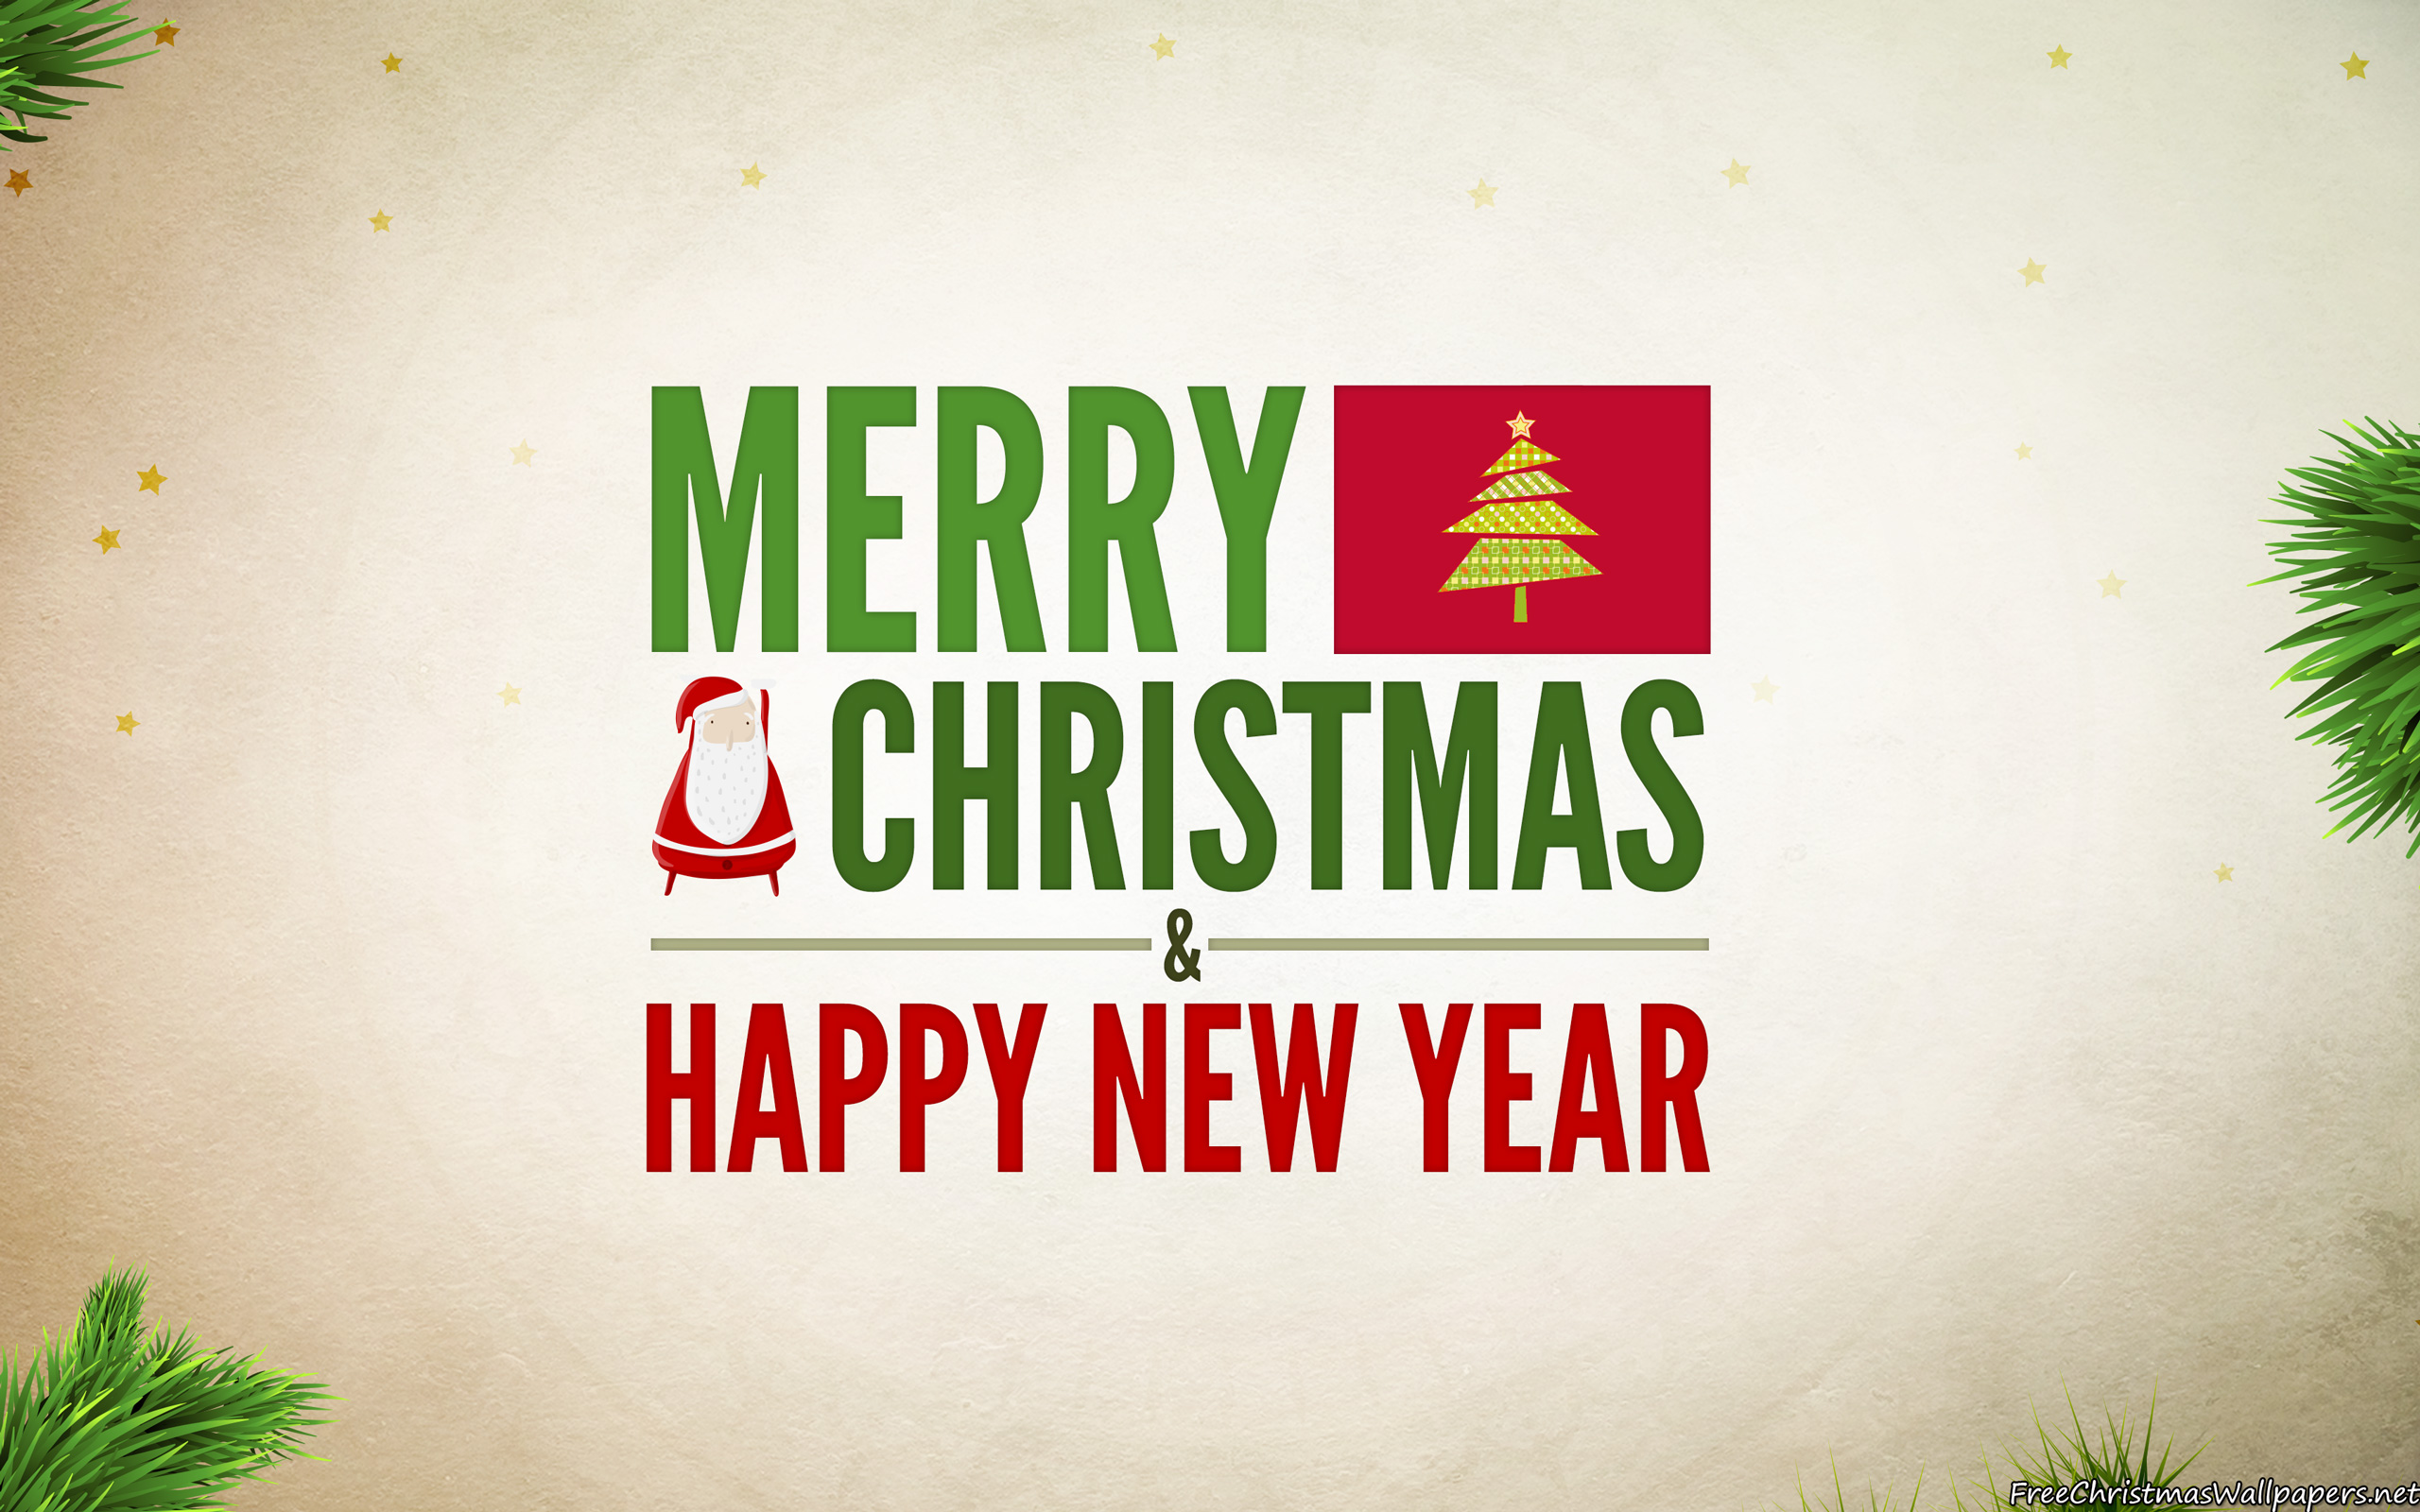  Greetings For Christmas Season “Good Times Wishes”